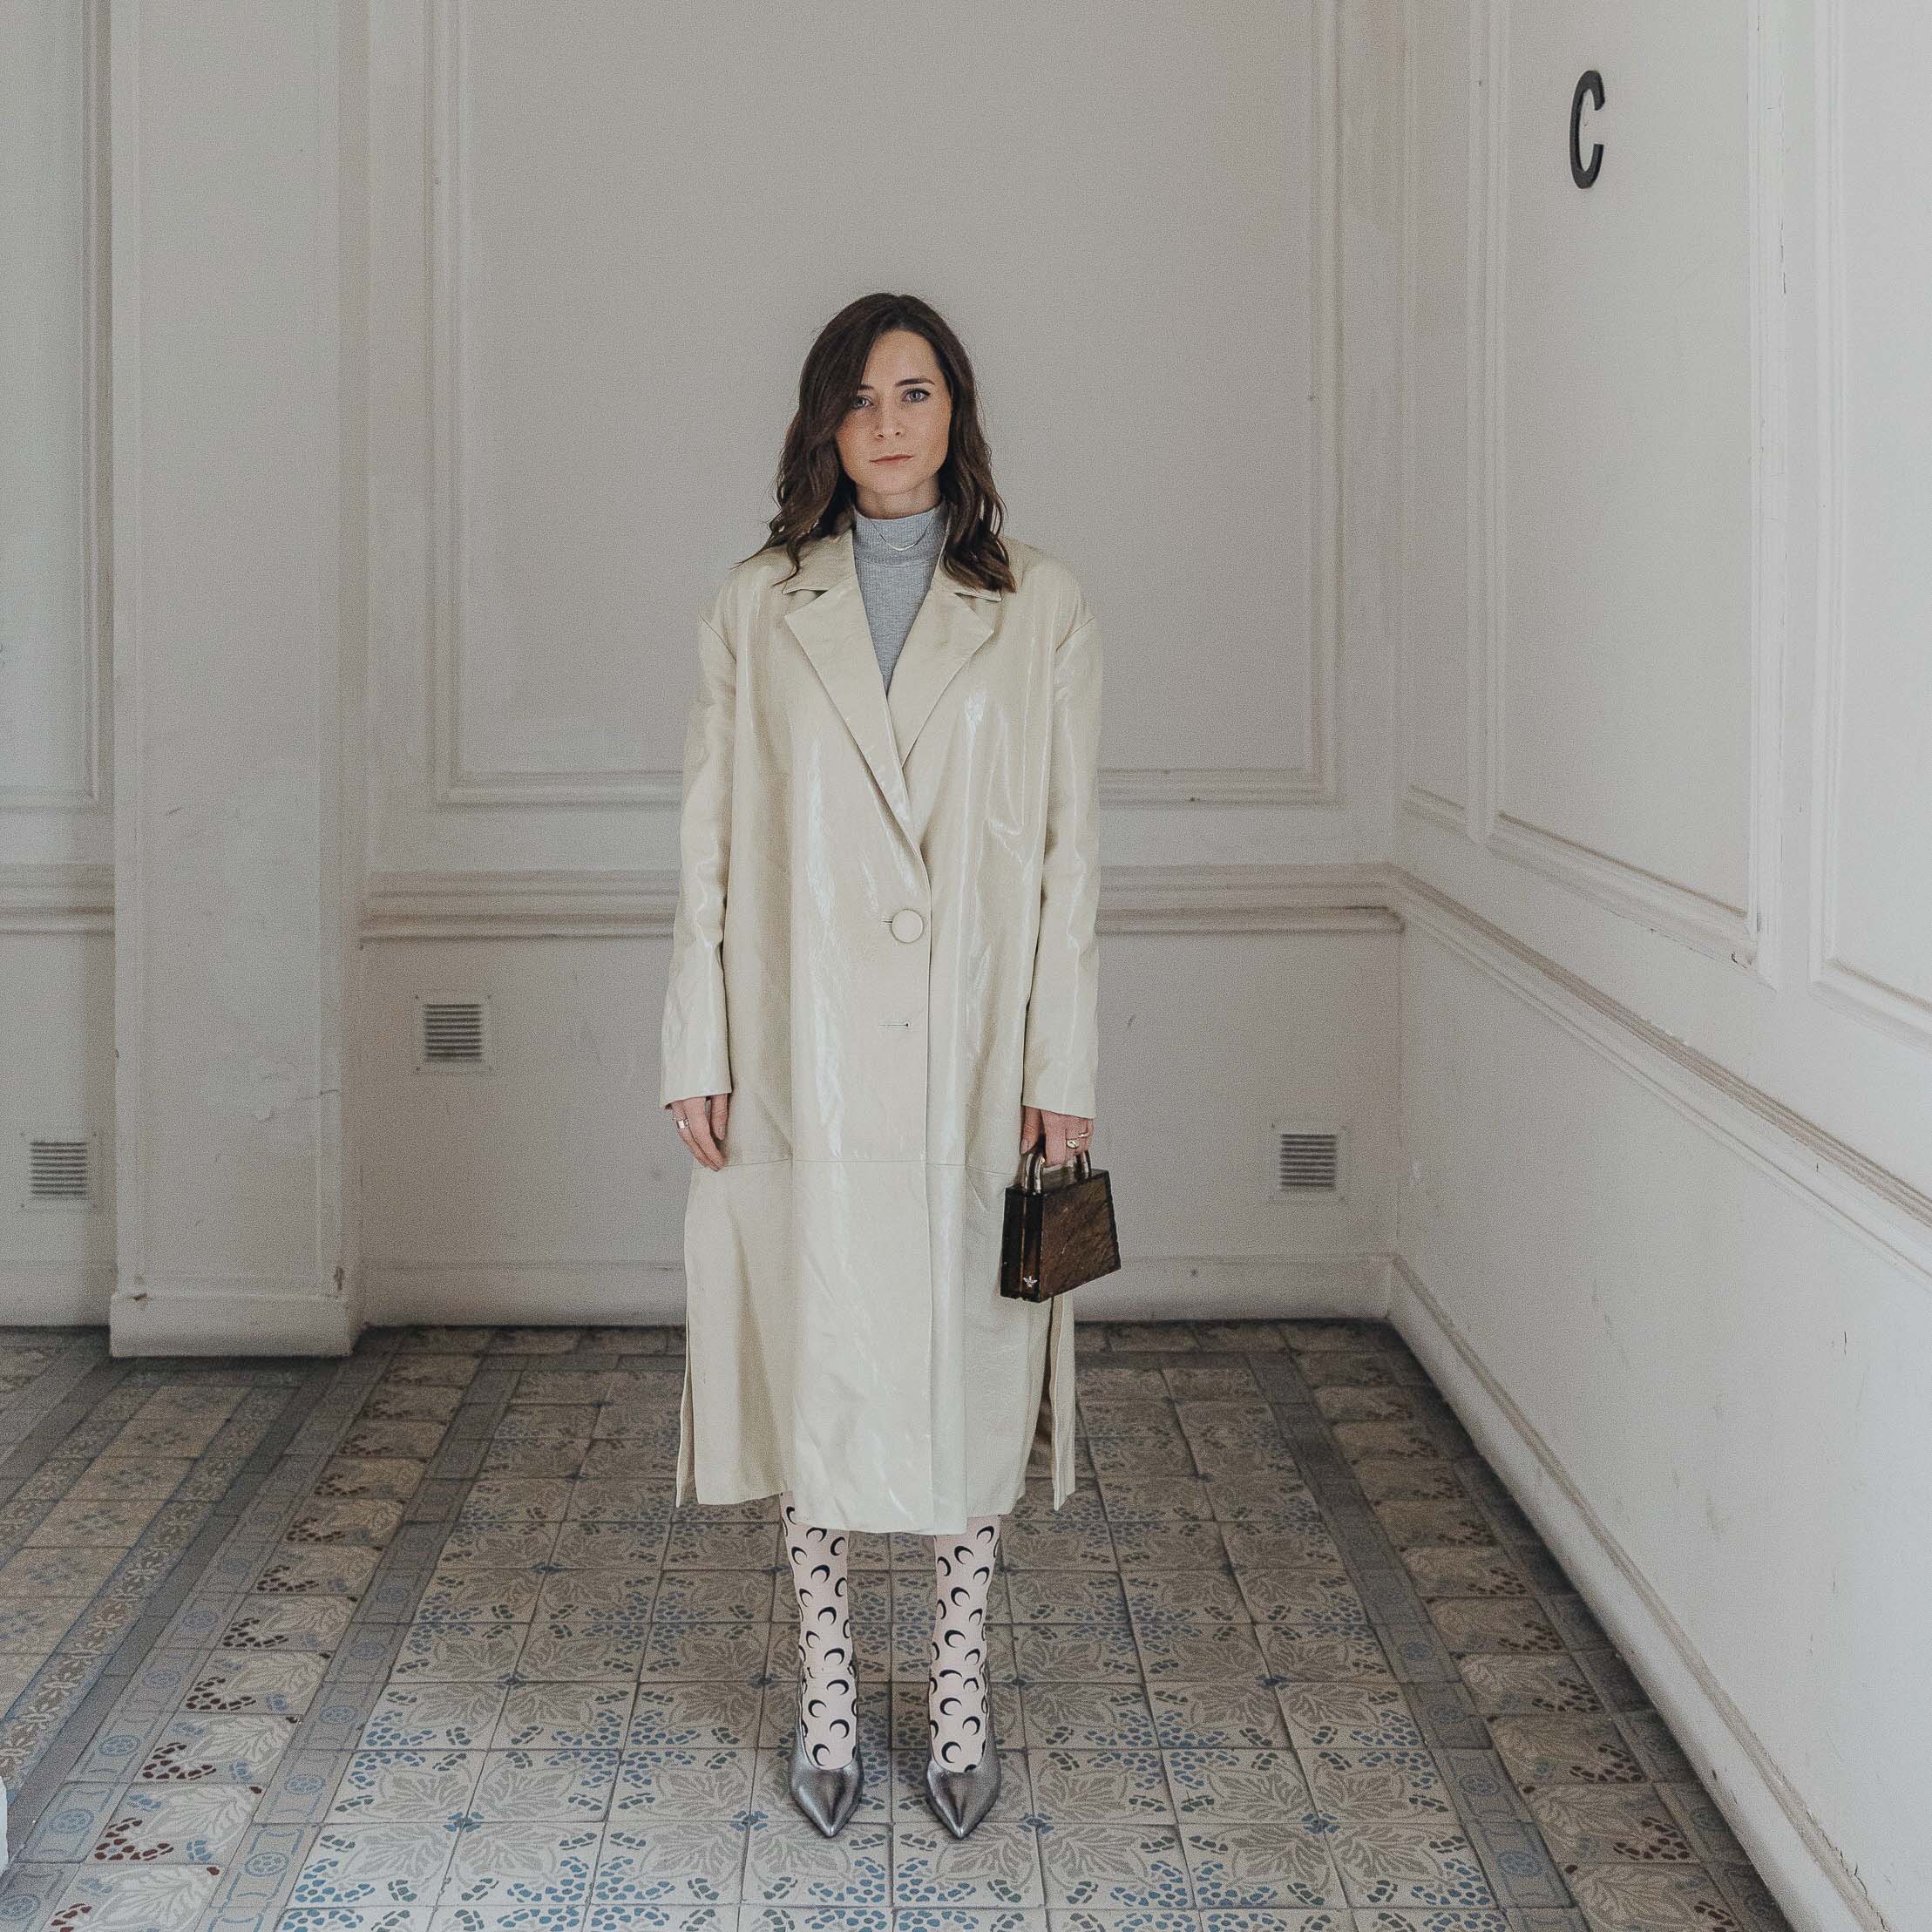 PFW SS20 Street Style Fall 2019 Paris Fashion Week Julia Comil wearing Madiyahalsharqi coat, bag Lilianafshar, pumps Clergerie, Tights Marine Serre